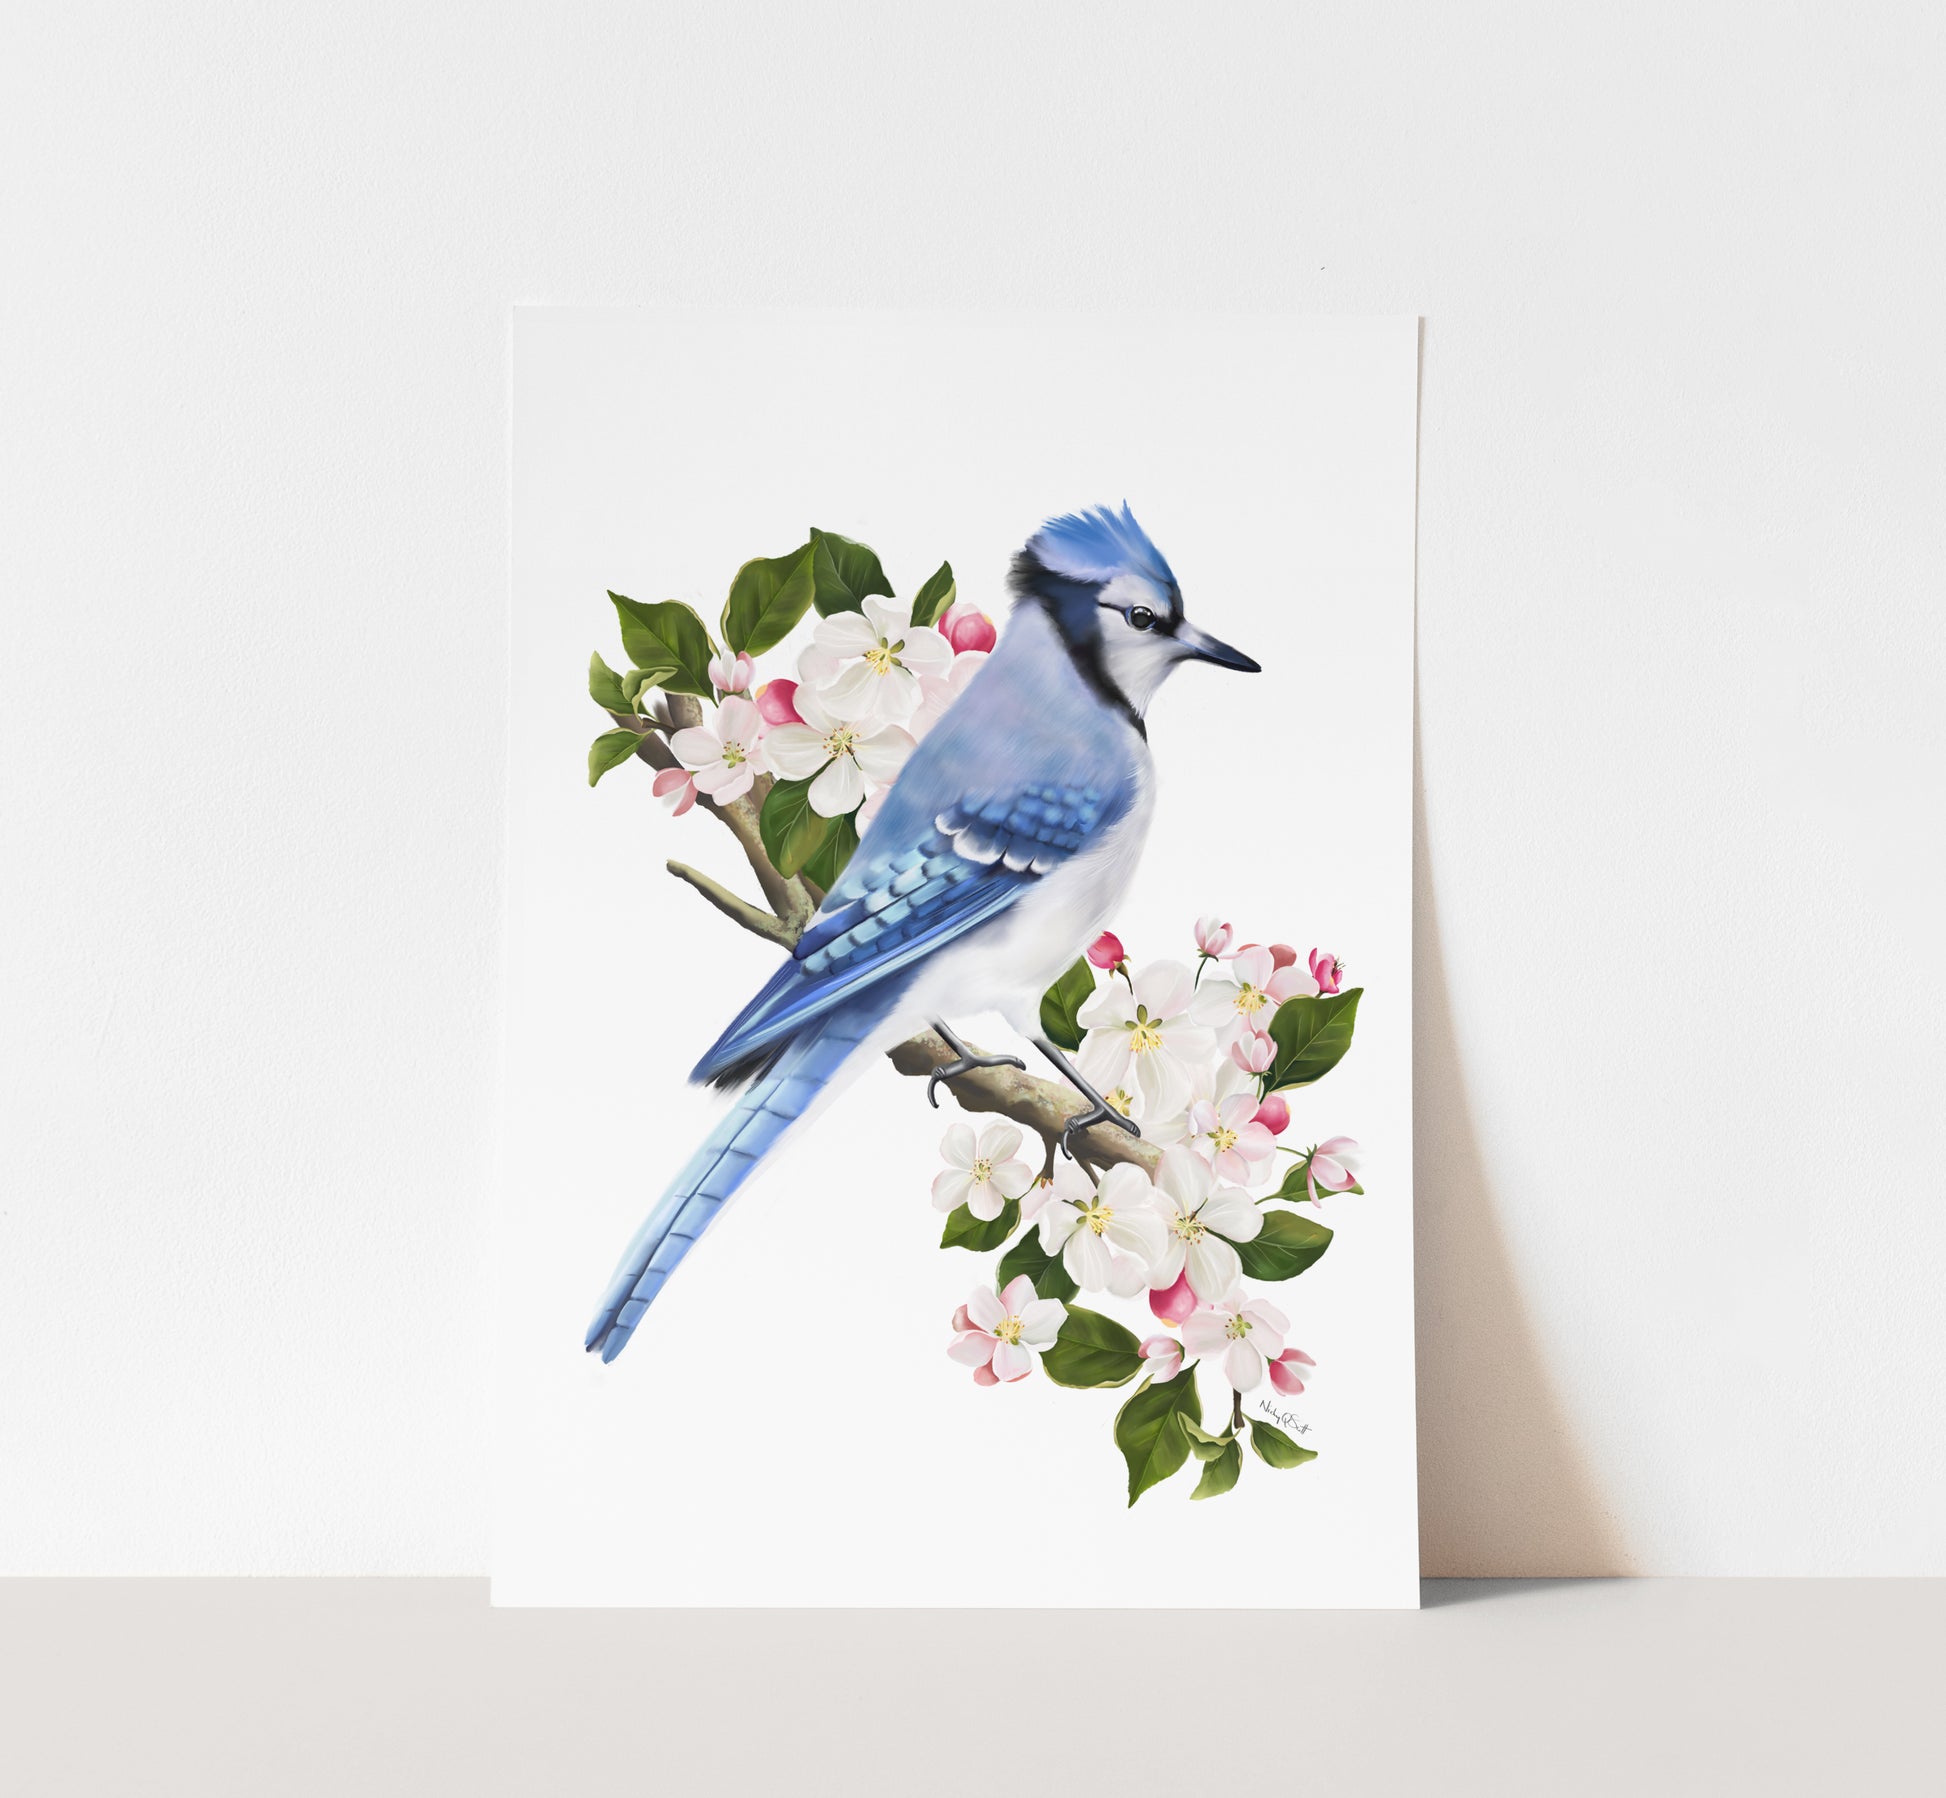 Blue Jay Bird on Apple Blossom Branch Art Print - Studio Q - Art by Nicky Quartermaine Scott